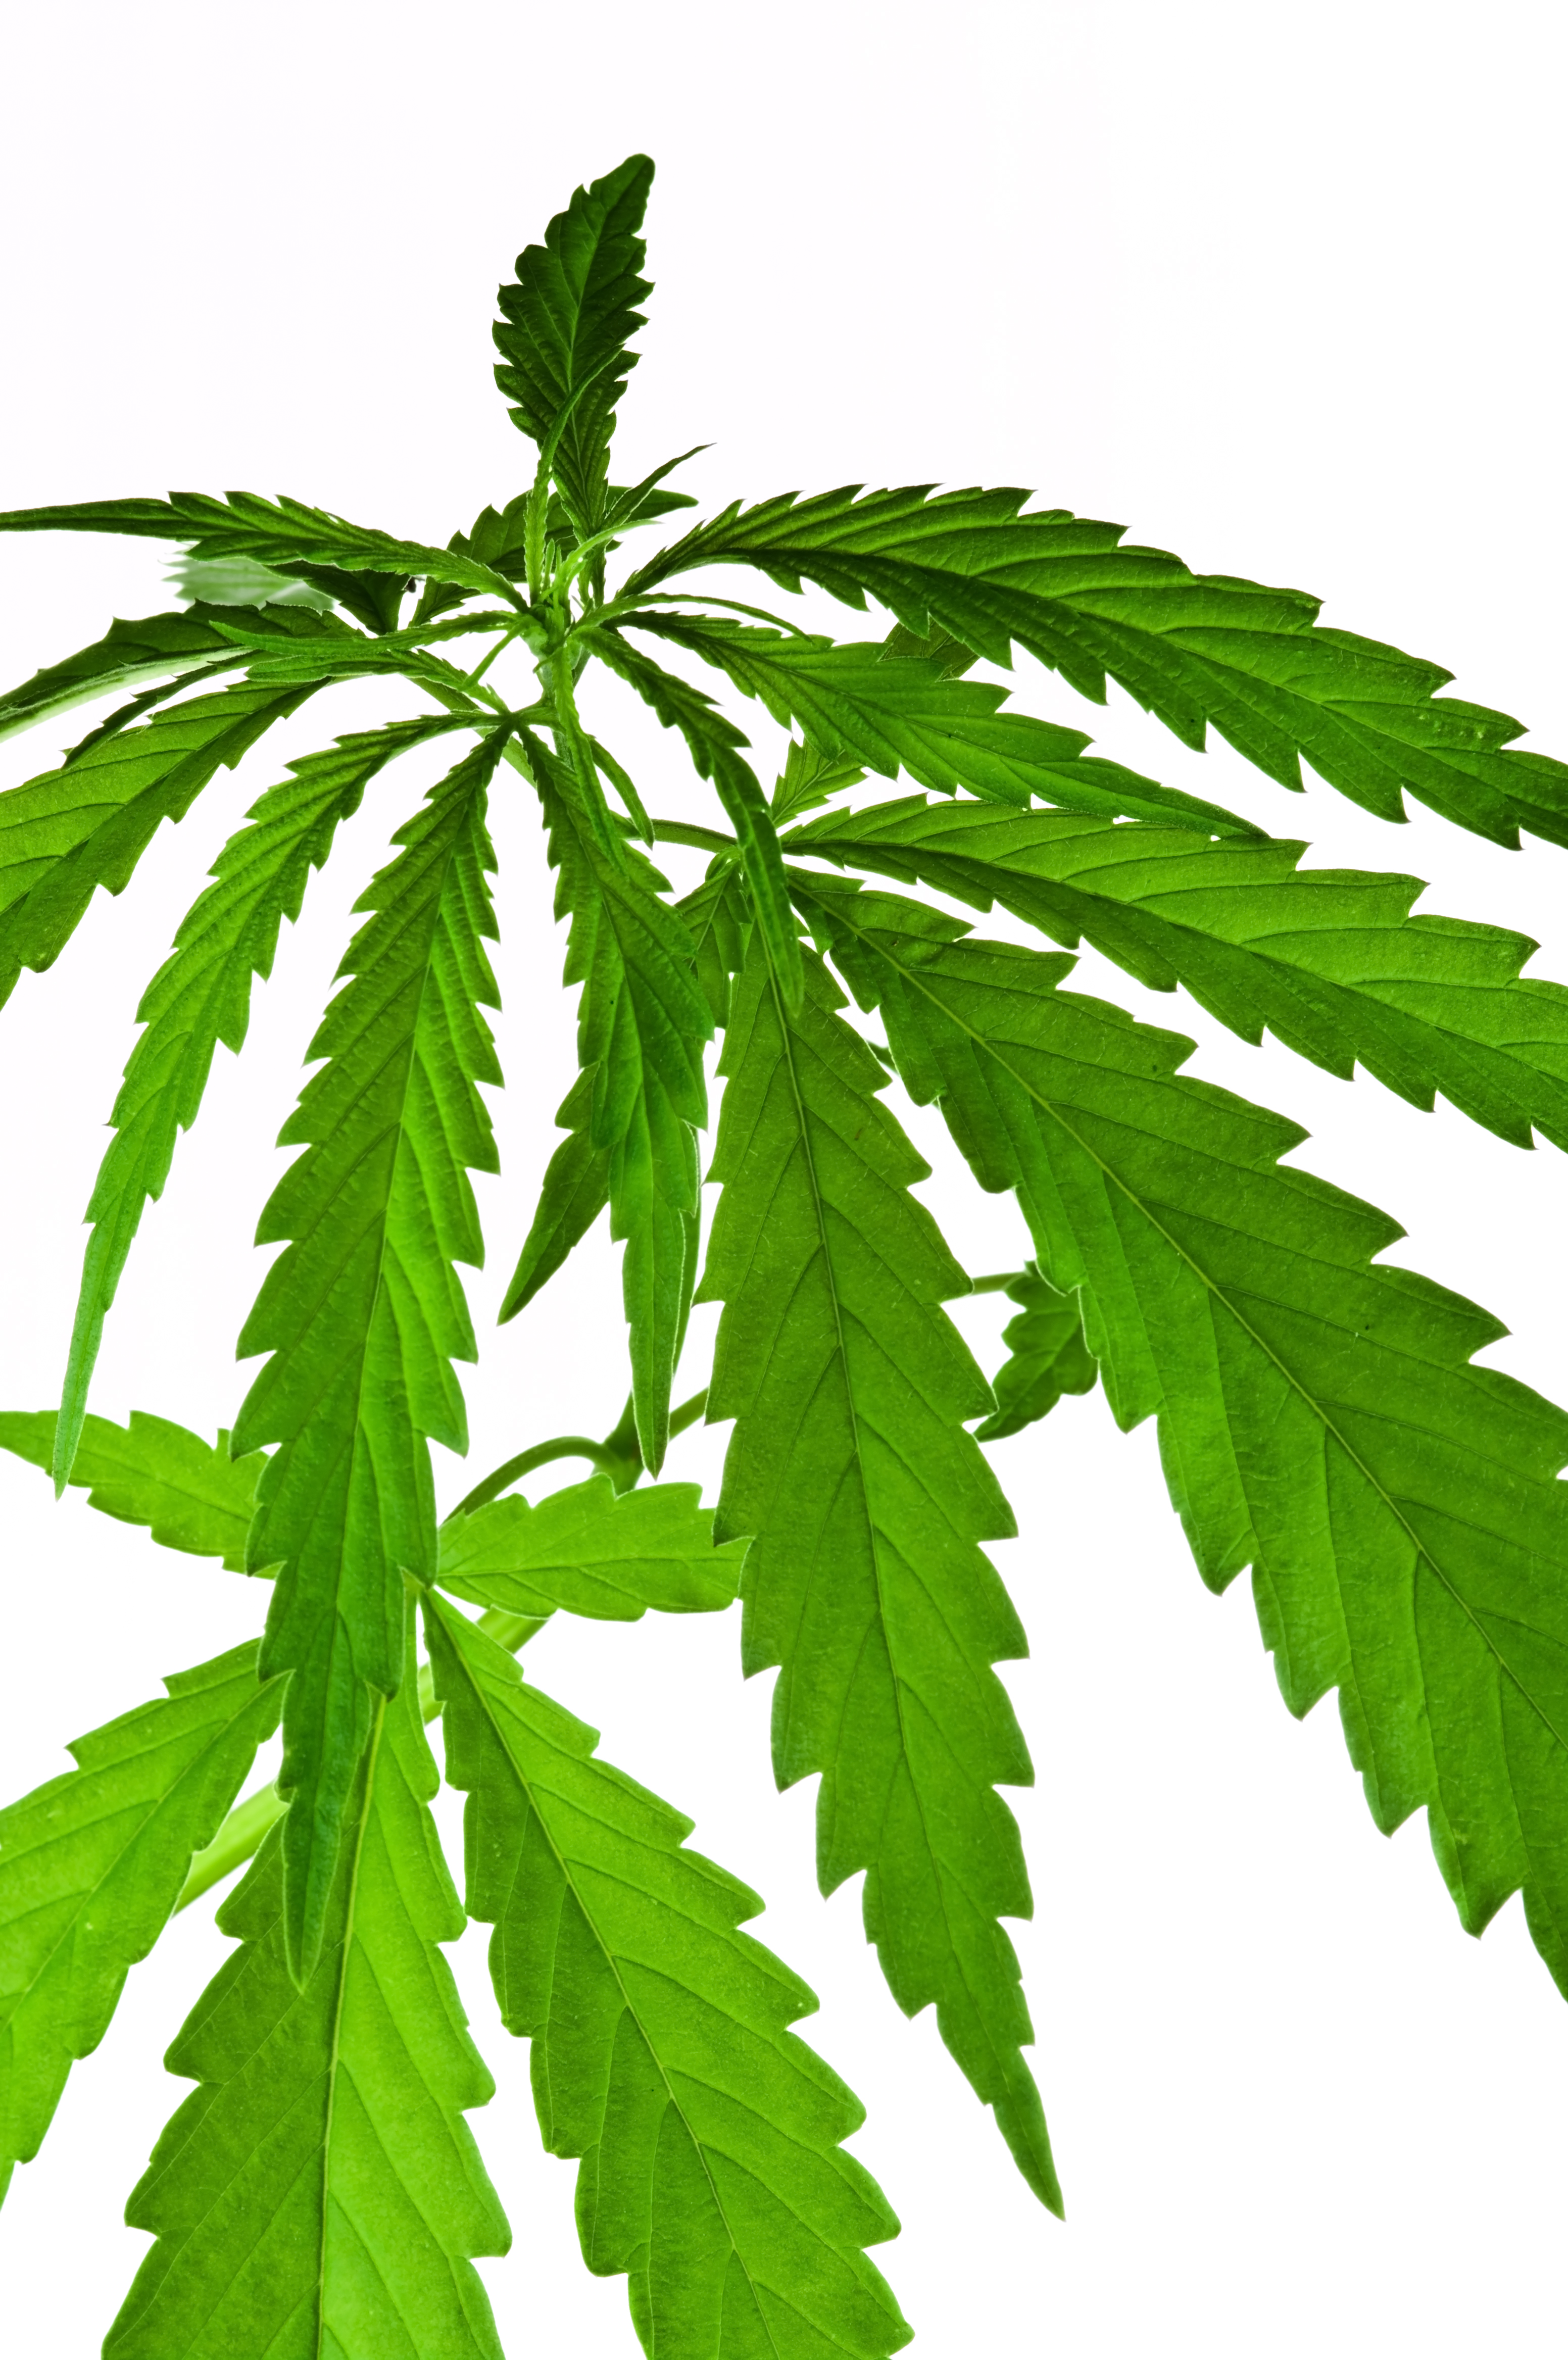 File:Cannabis indica plant IMGP3337.jpg - Wikimedia Commons